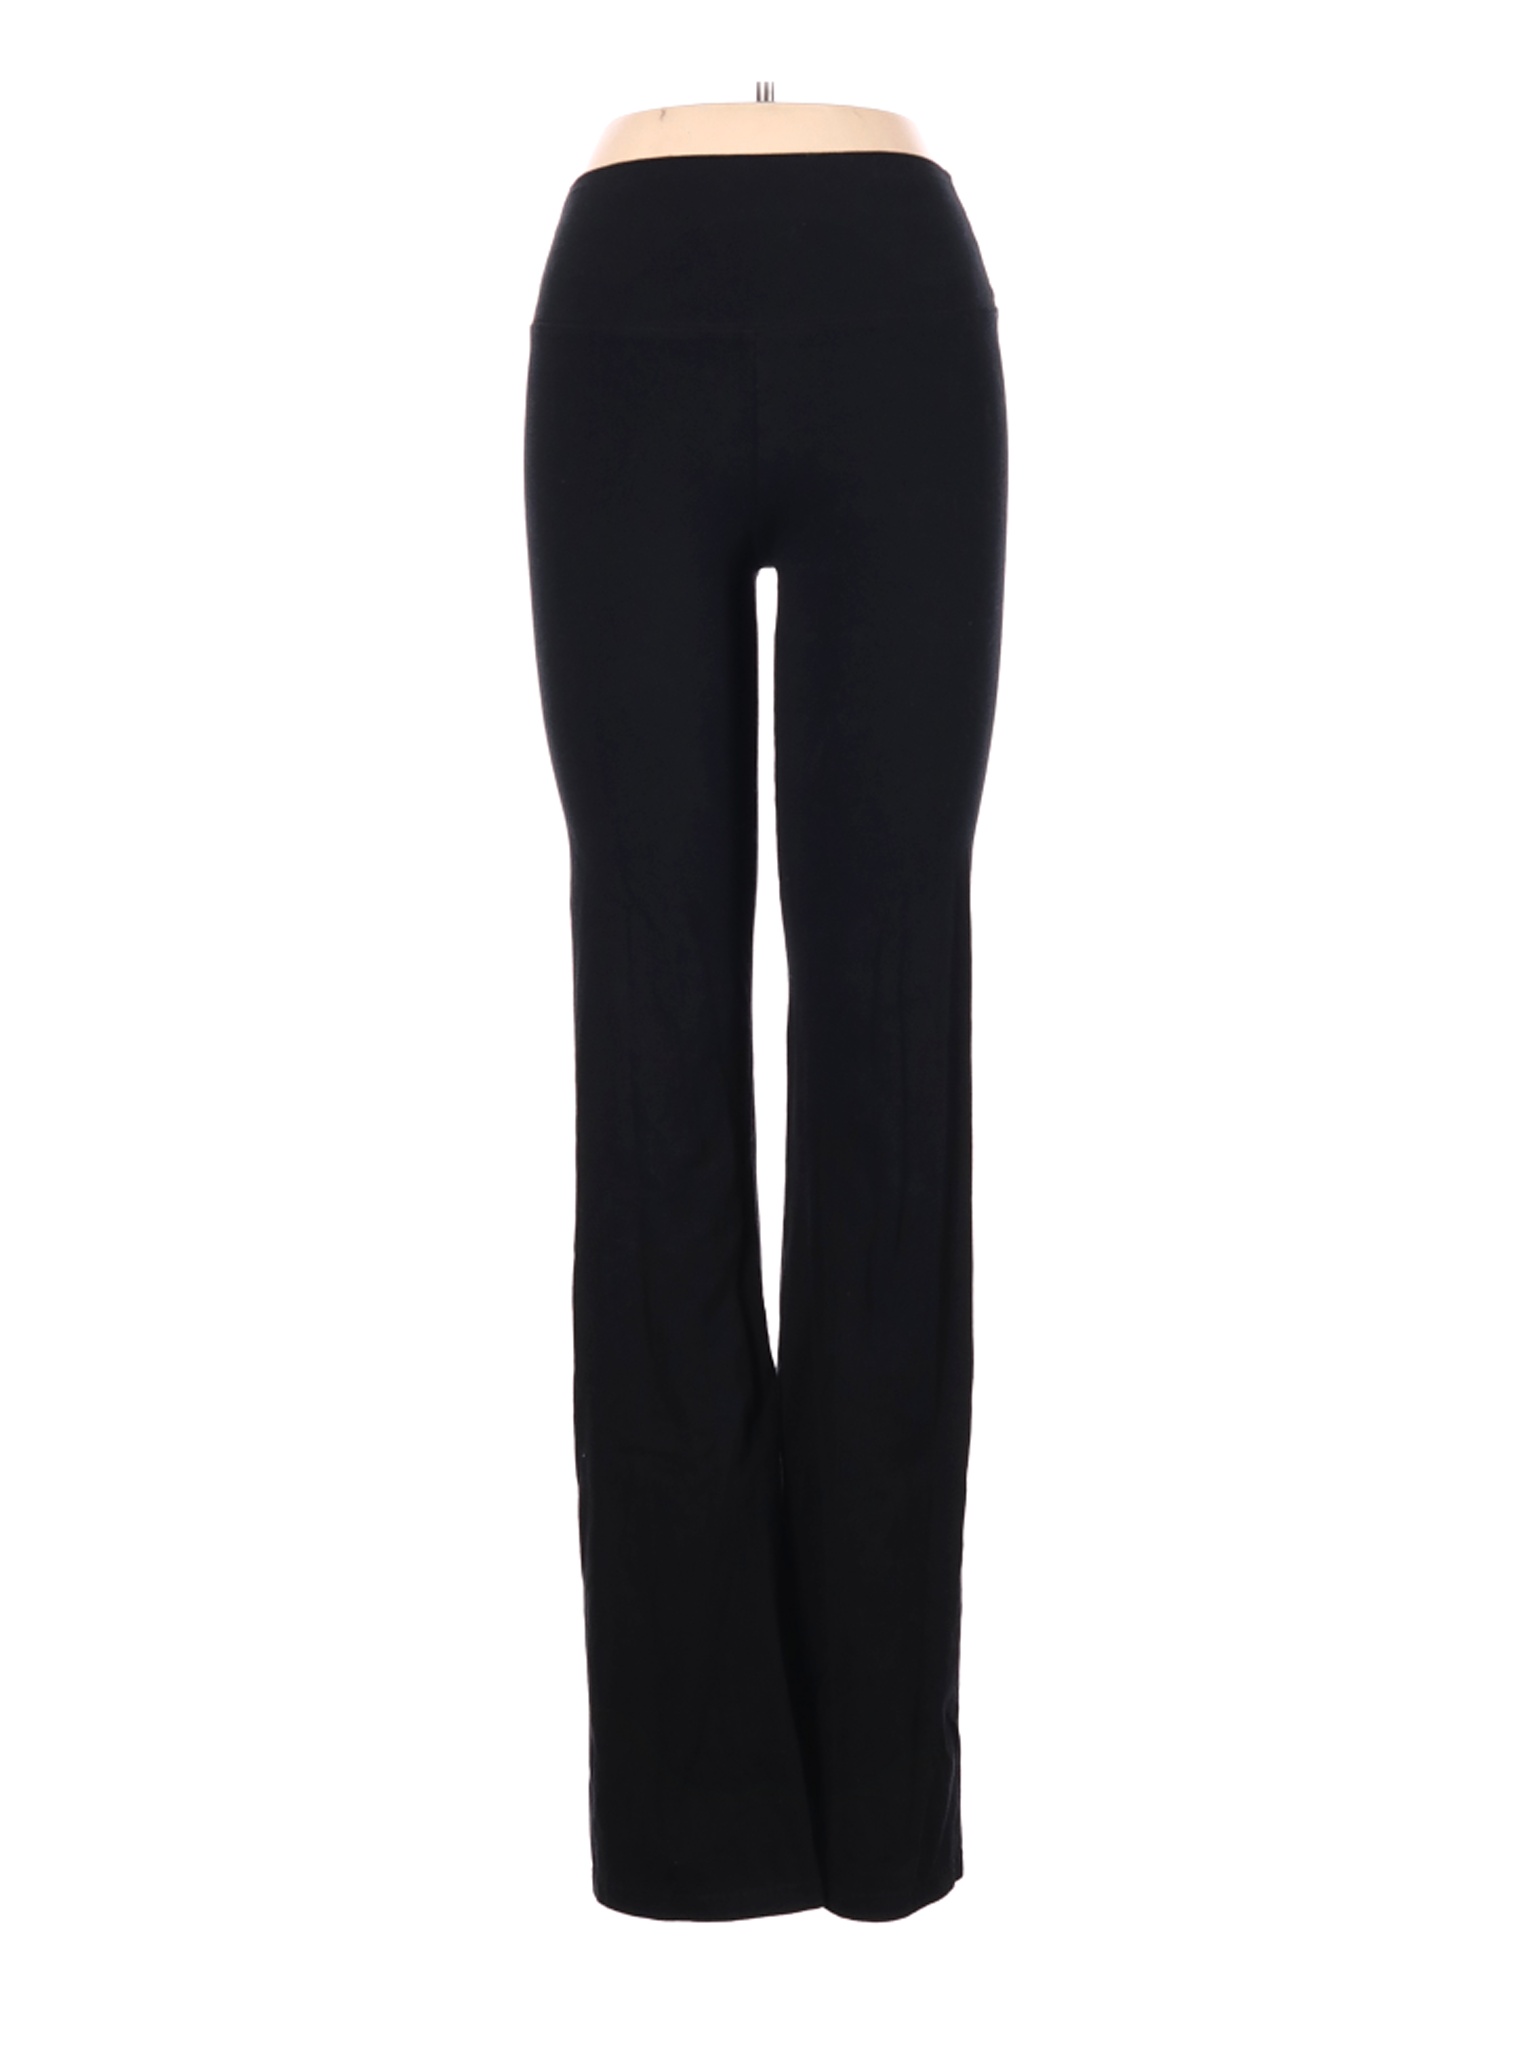 Aerie Women Black Casual Pants M | eBay